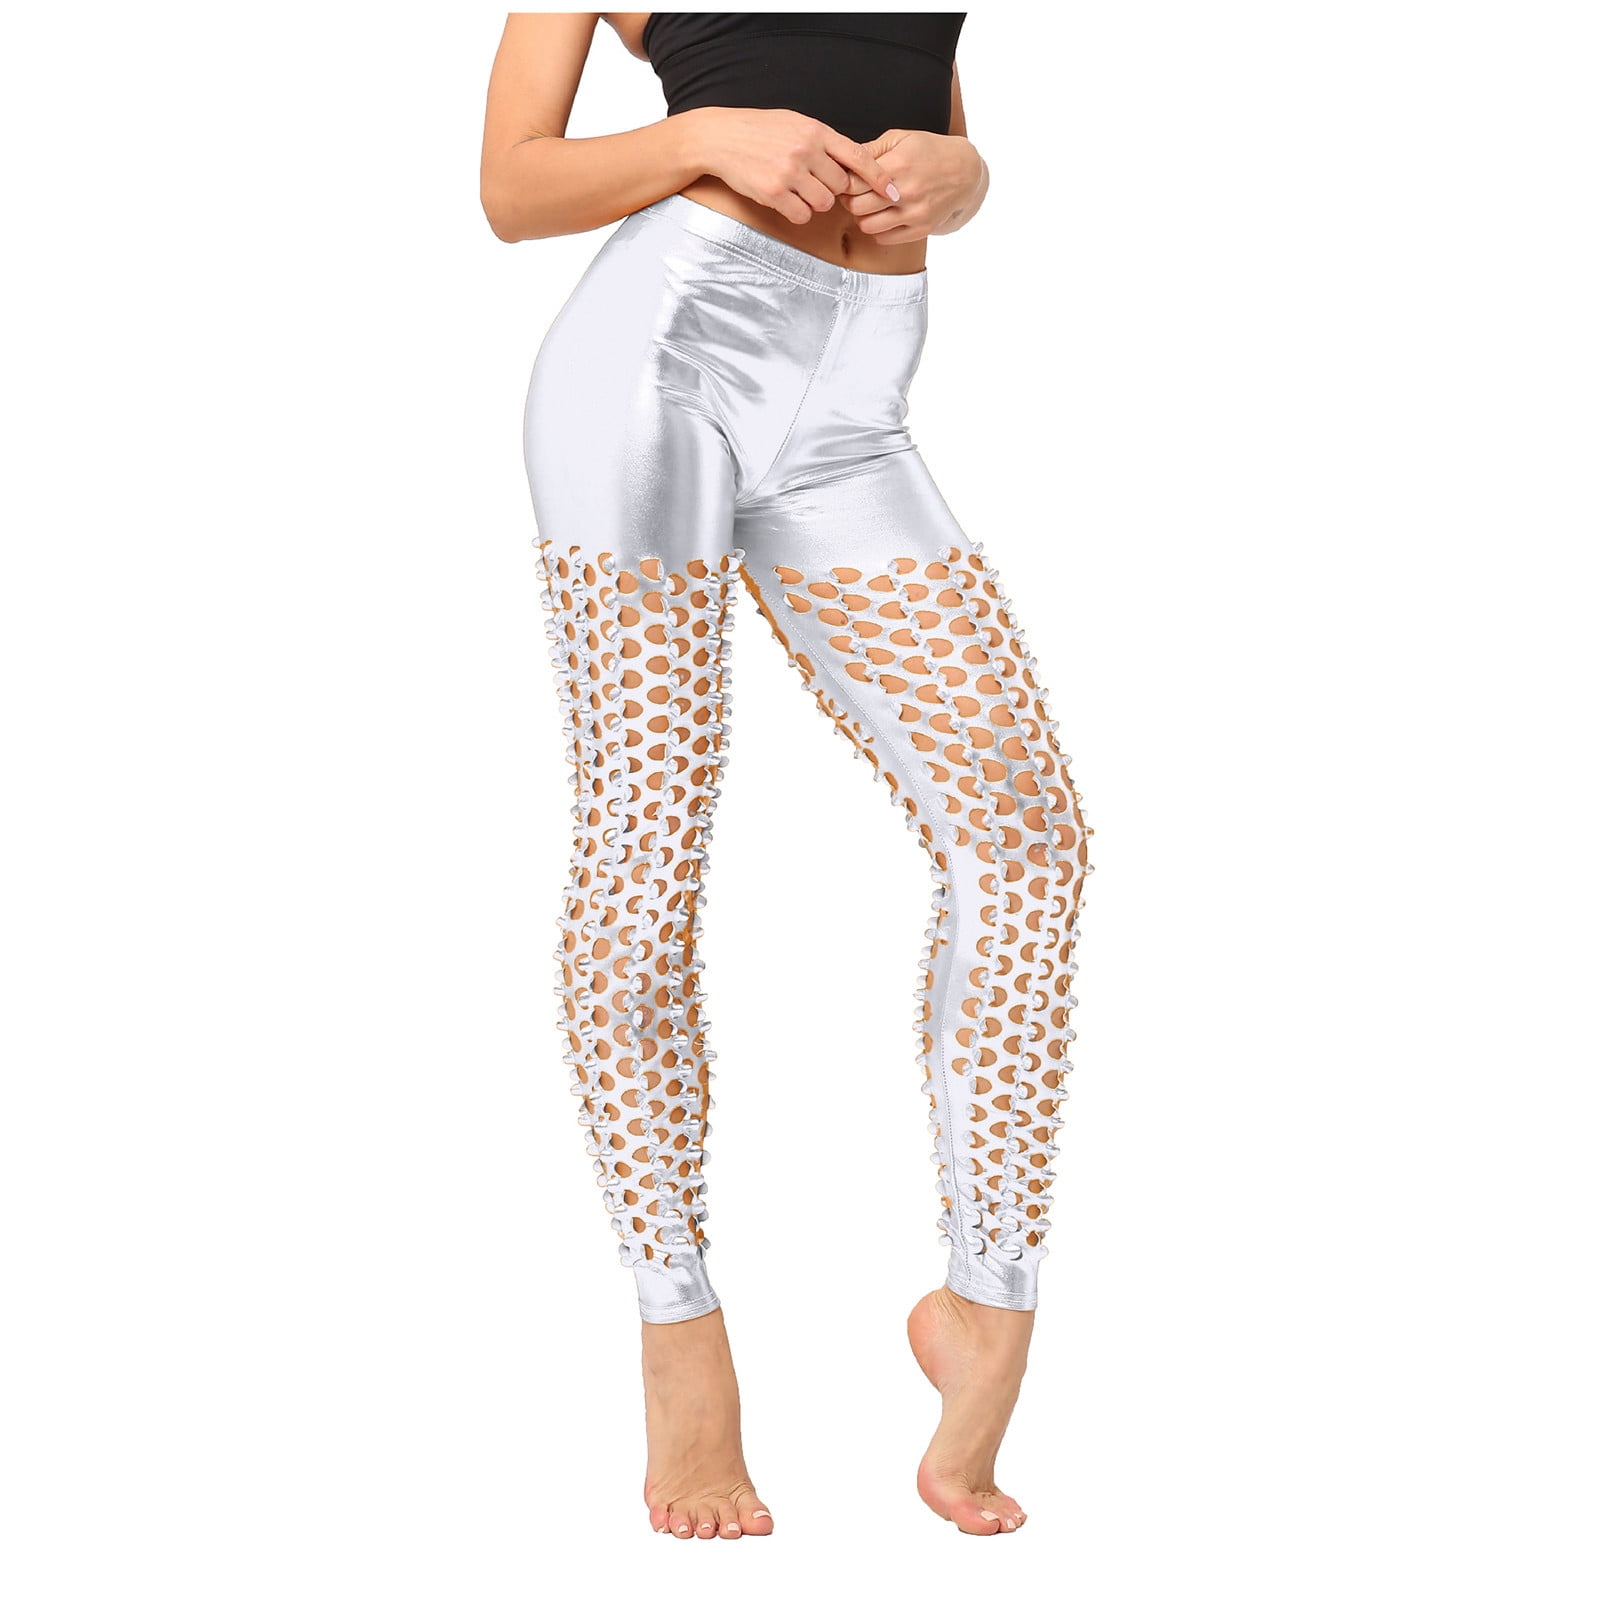 Gubotare Yoga Pants Leggings with Pockets for Women(Reg & Plus Size) - High  Waist Tummy Control Yoga Pants with Pockets for Workout,Silver One Size 